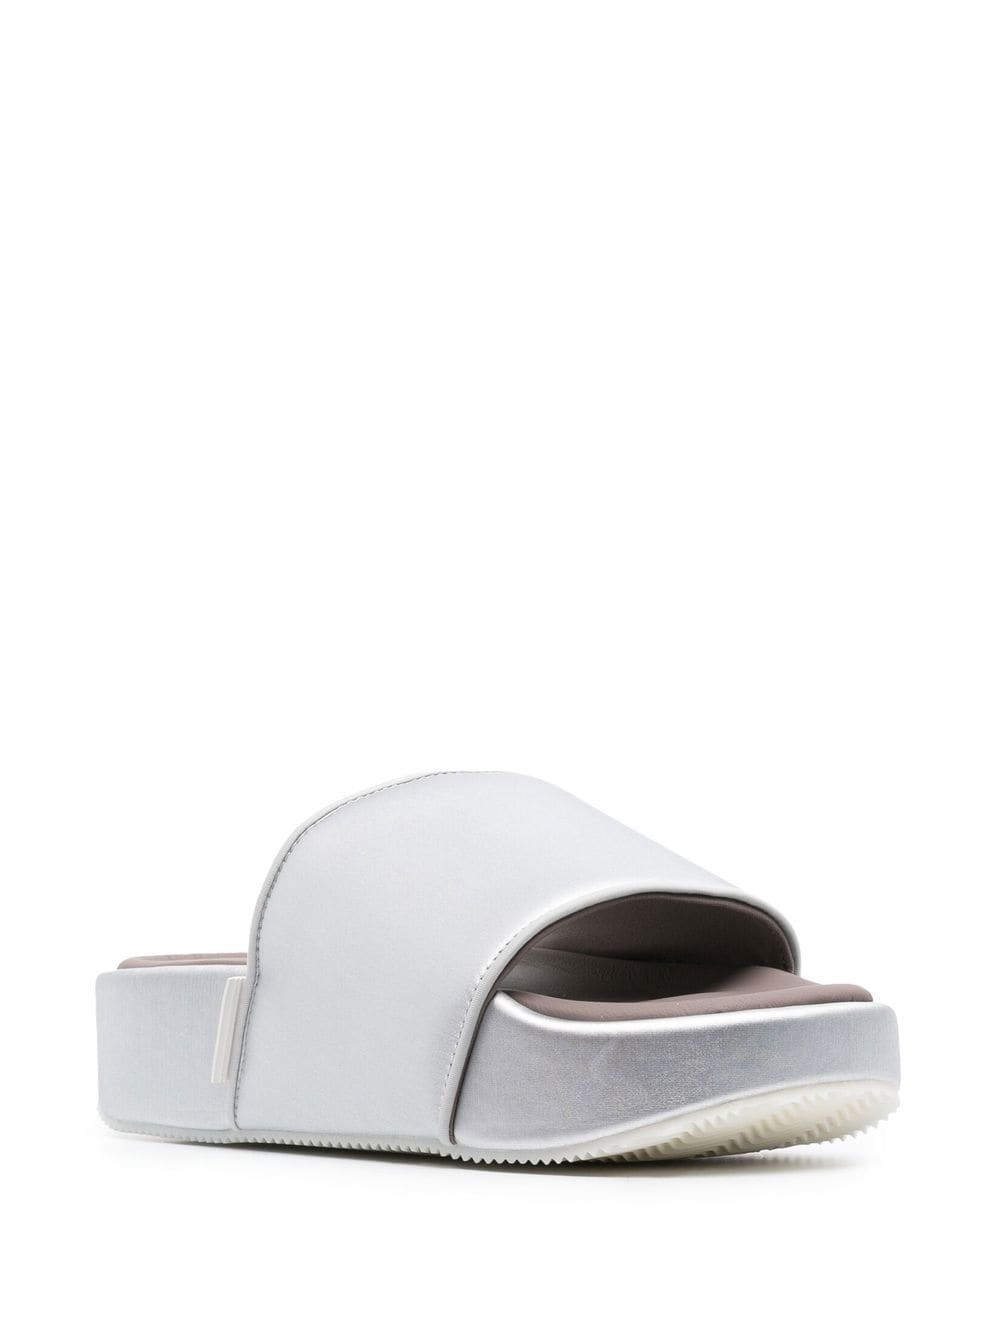 flatform open-toe sandals - 2